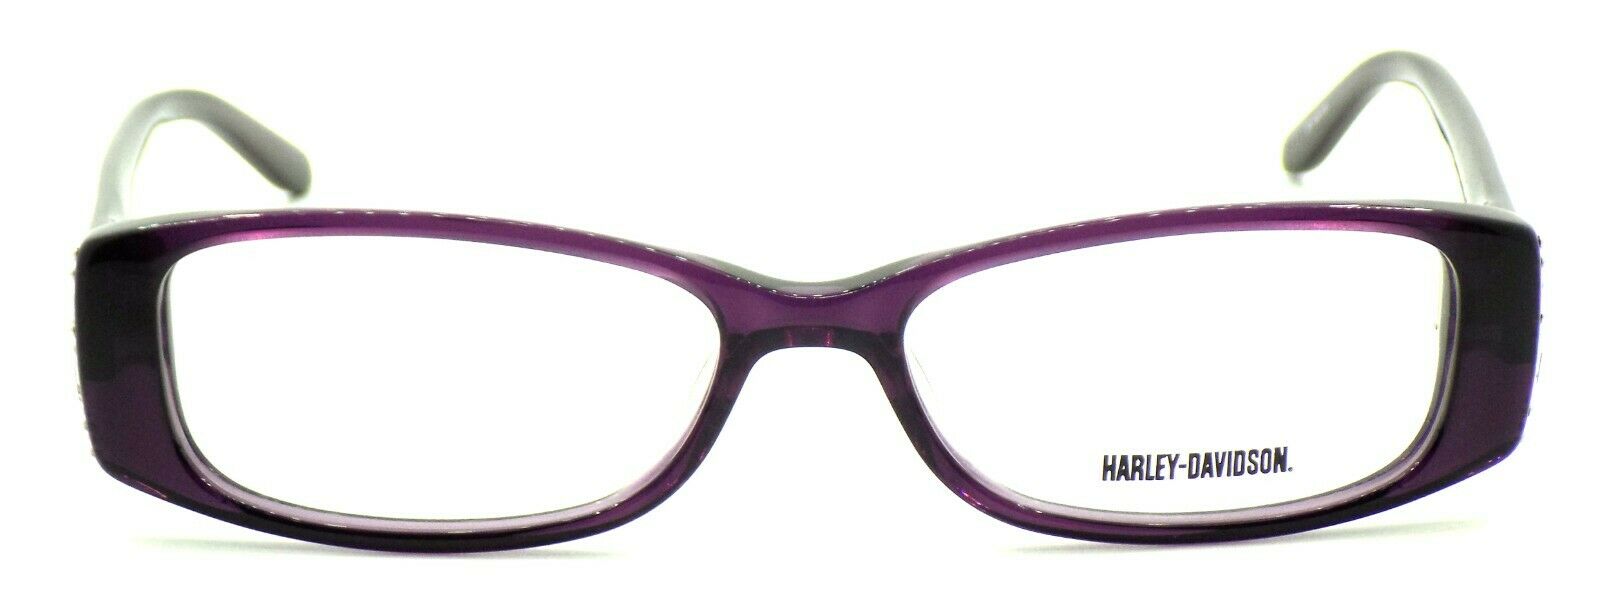 2-Harley Davidson HD515 PUR Women's Eyeglasses Frames 52-15-135 Purple w/ Crystals-715583766600-IKSpecs